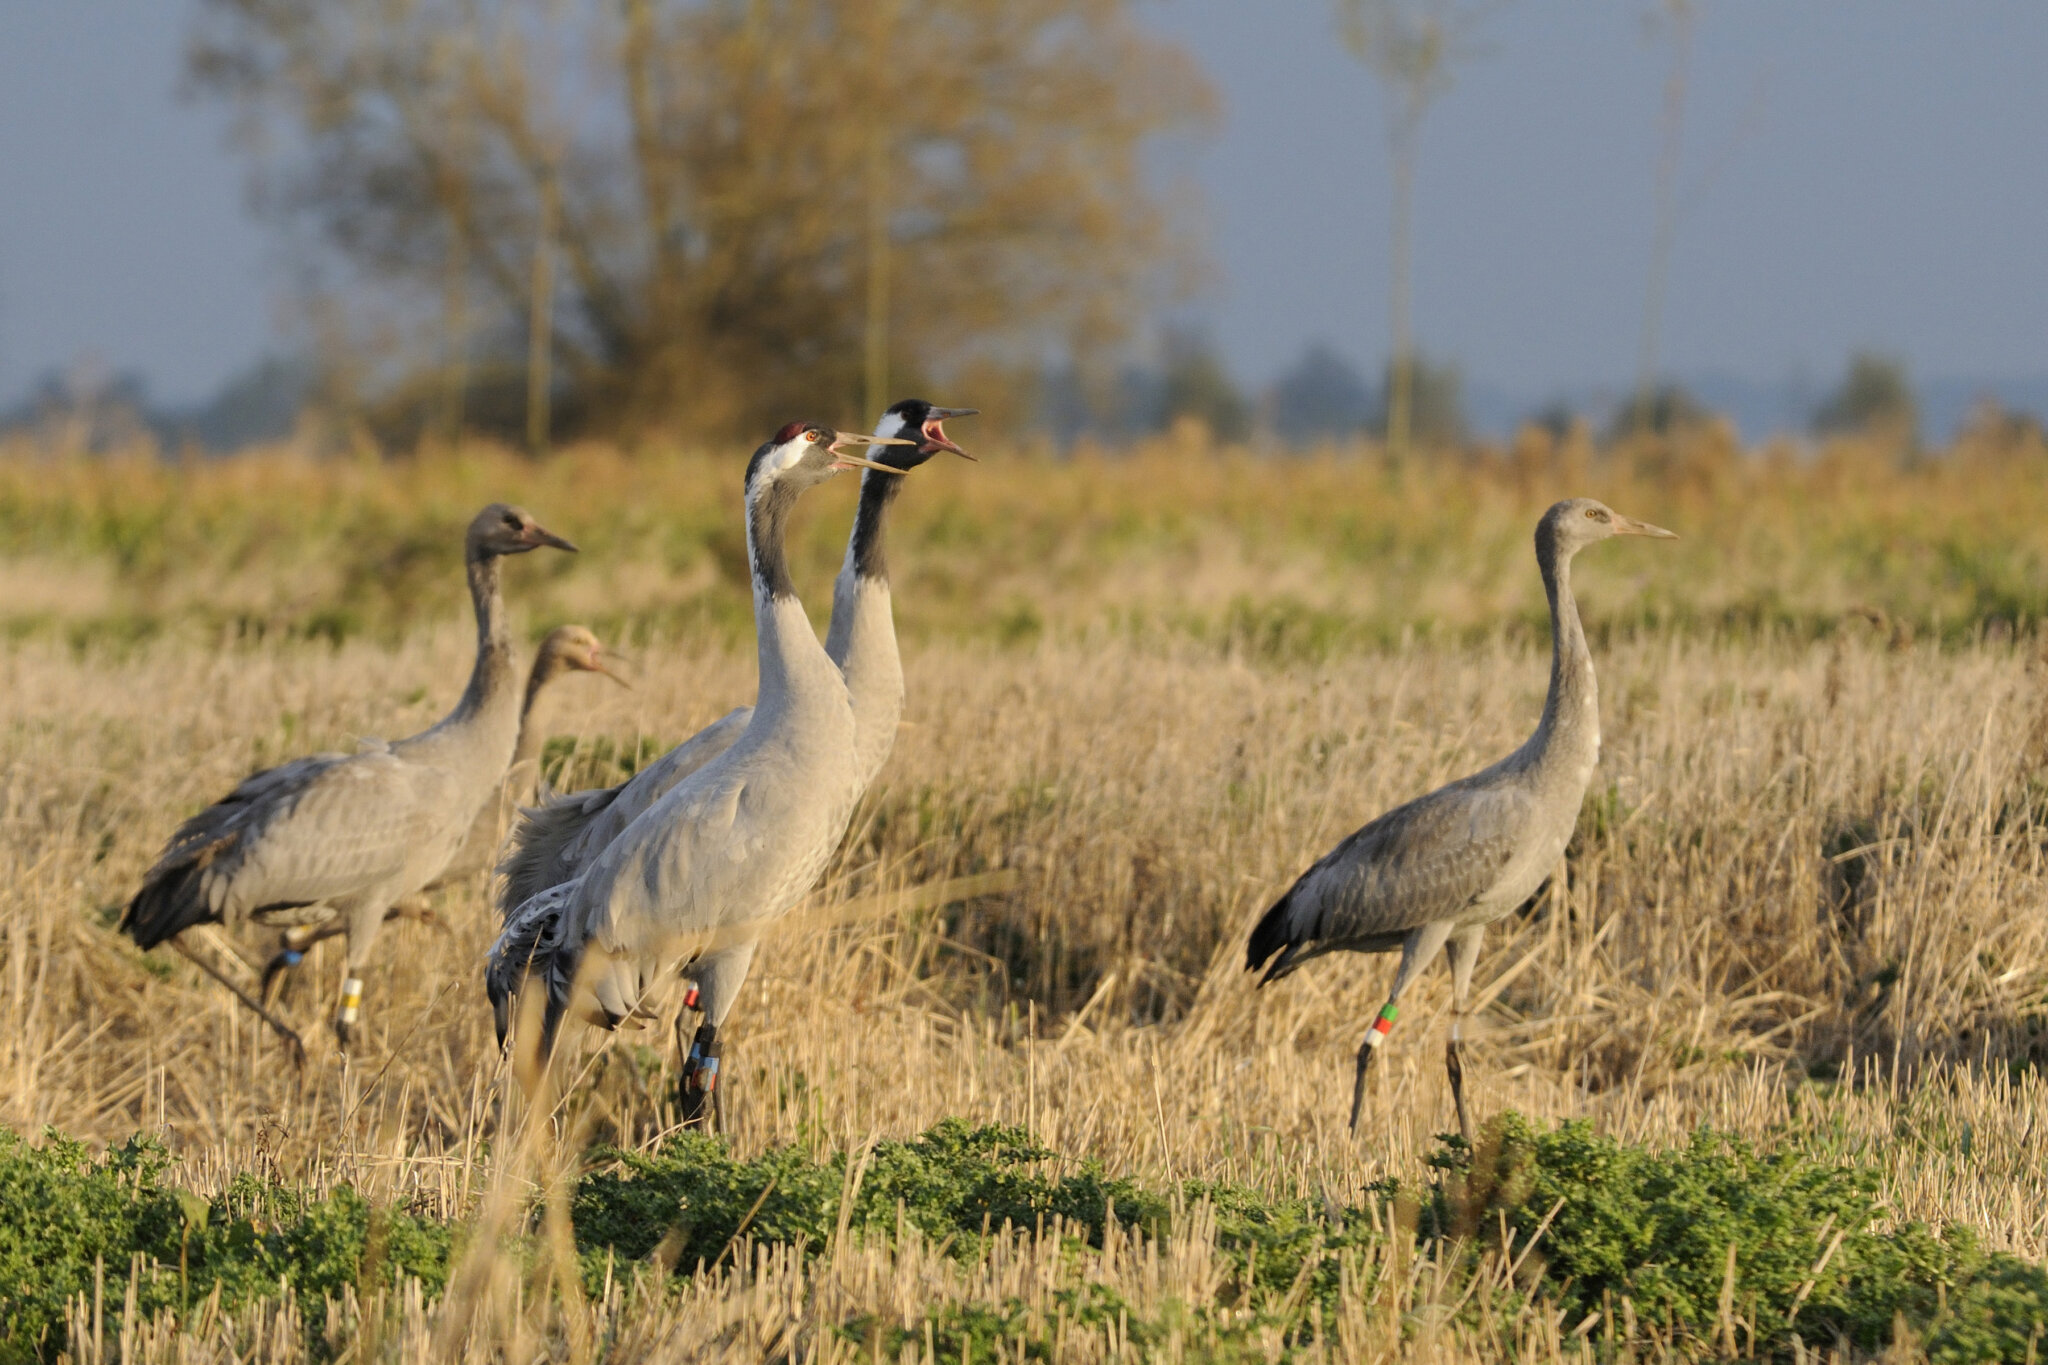 rspb-press-release-lots-of-cranes-mark-avery